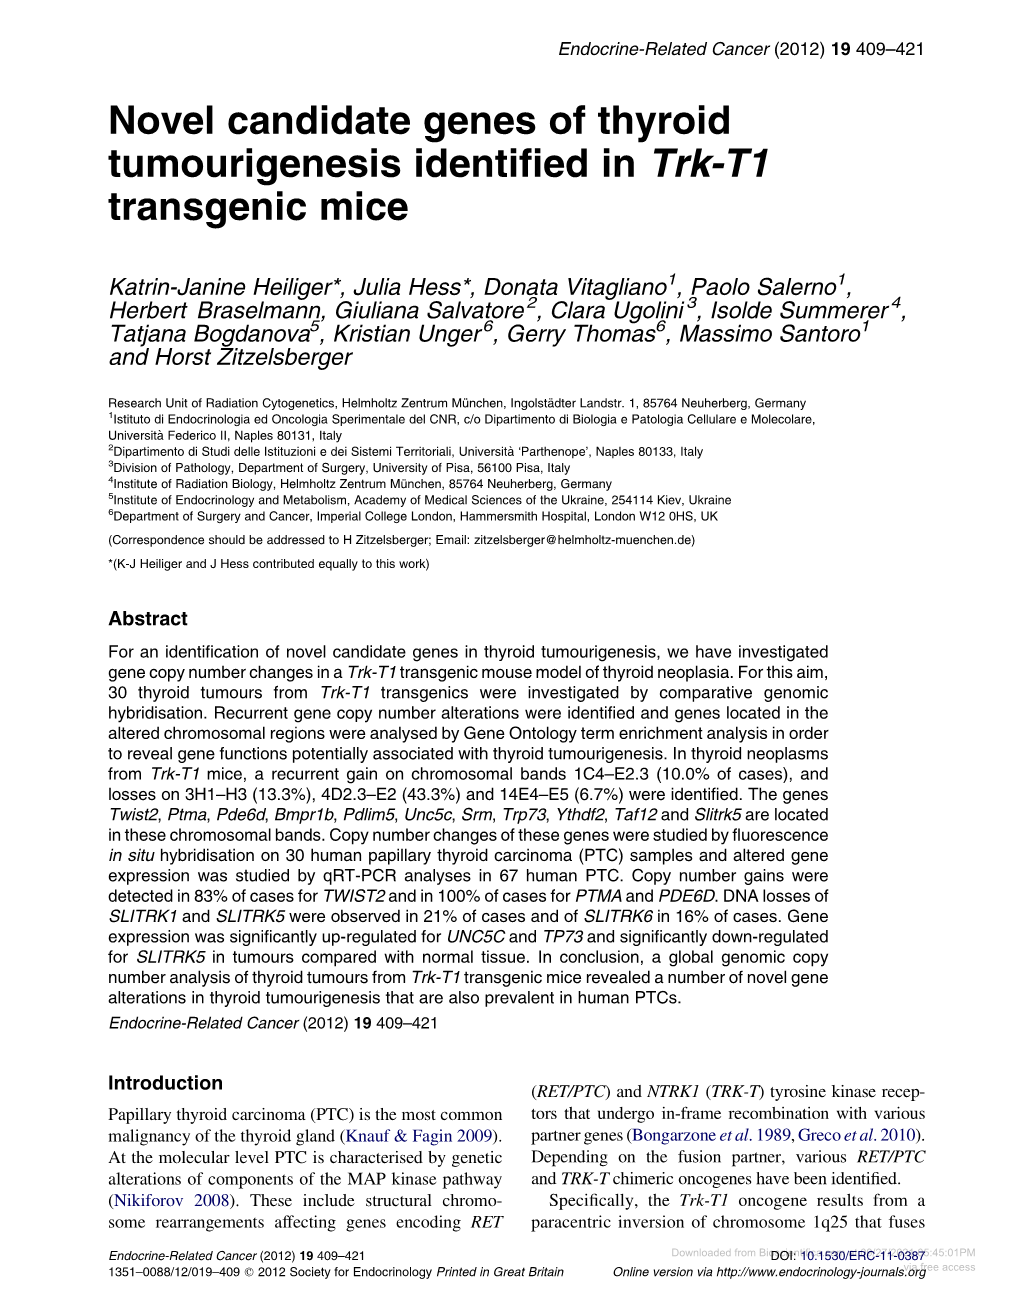 Novel Candidate Genes of Thyroid Tumourigenesis Identified in Trk-T1